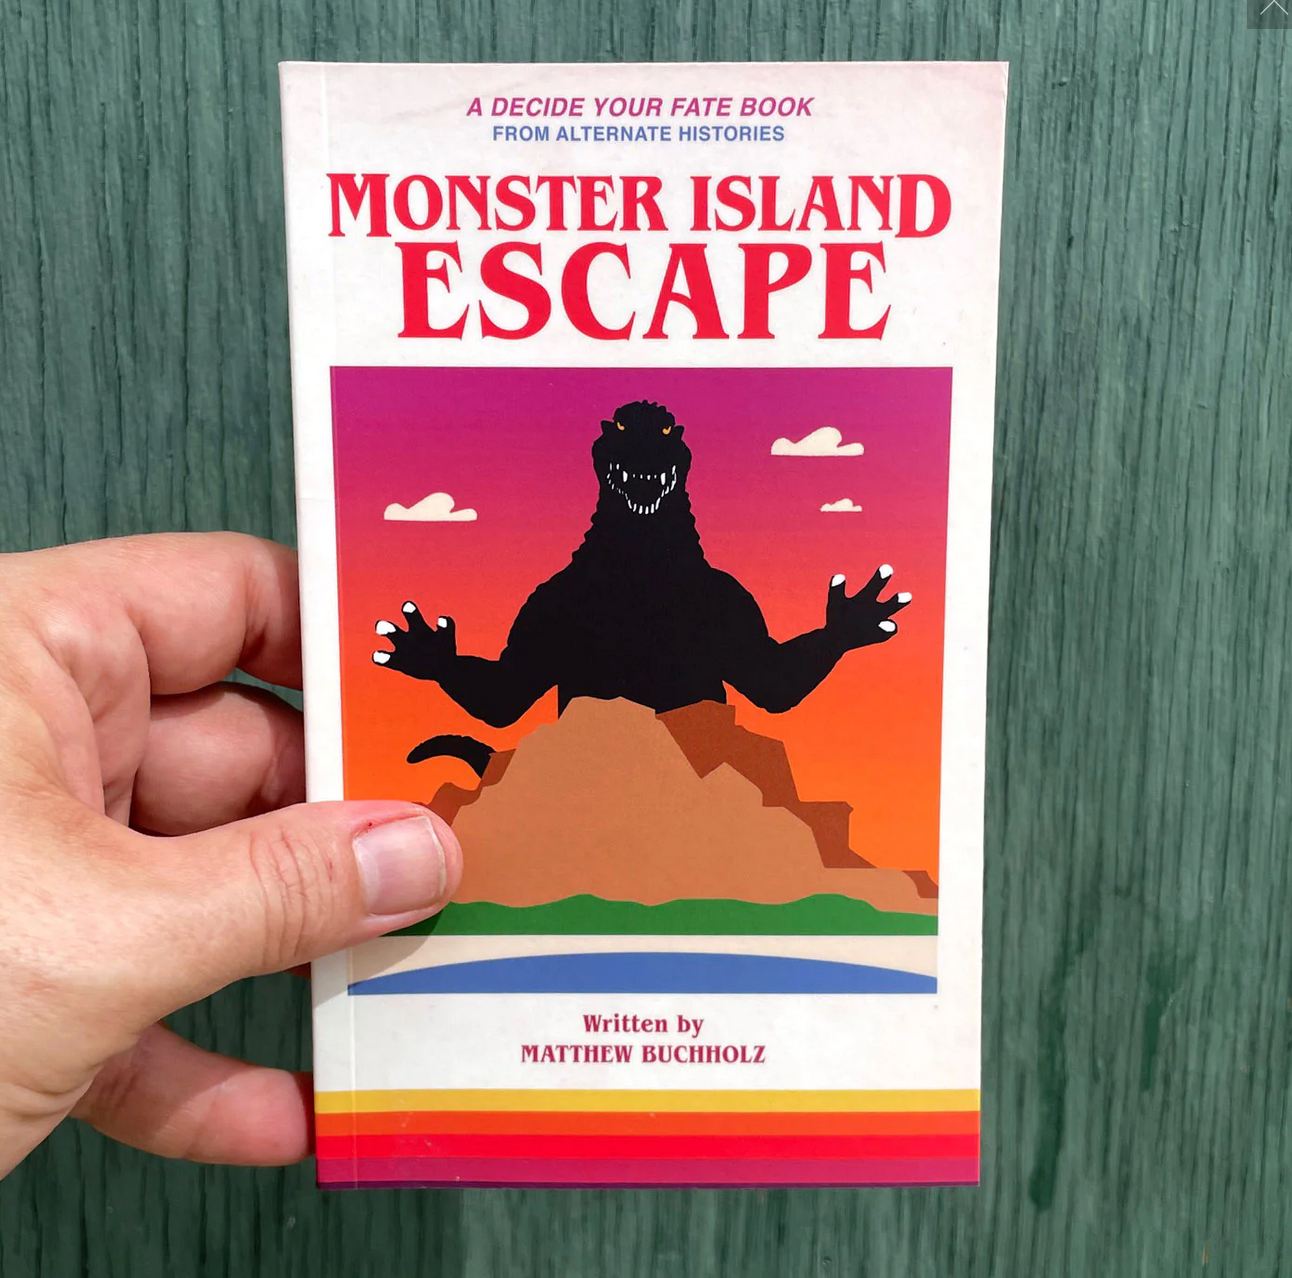 Monster Island Escape - Decide Your Fate Book